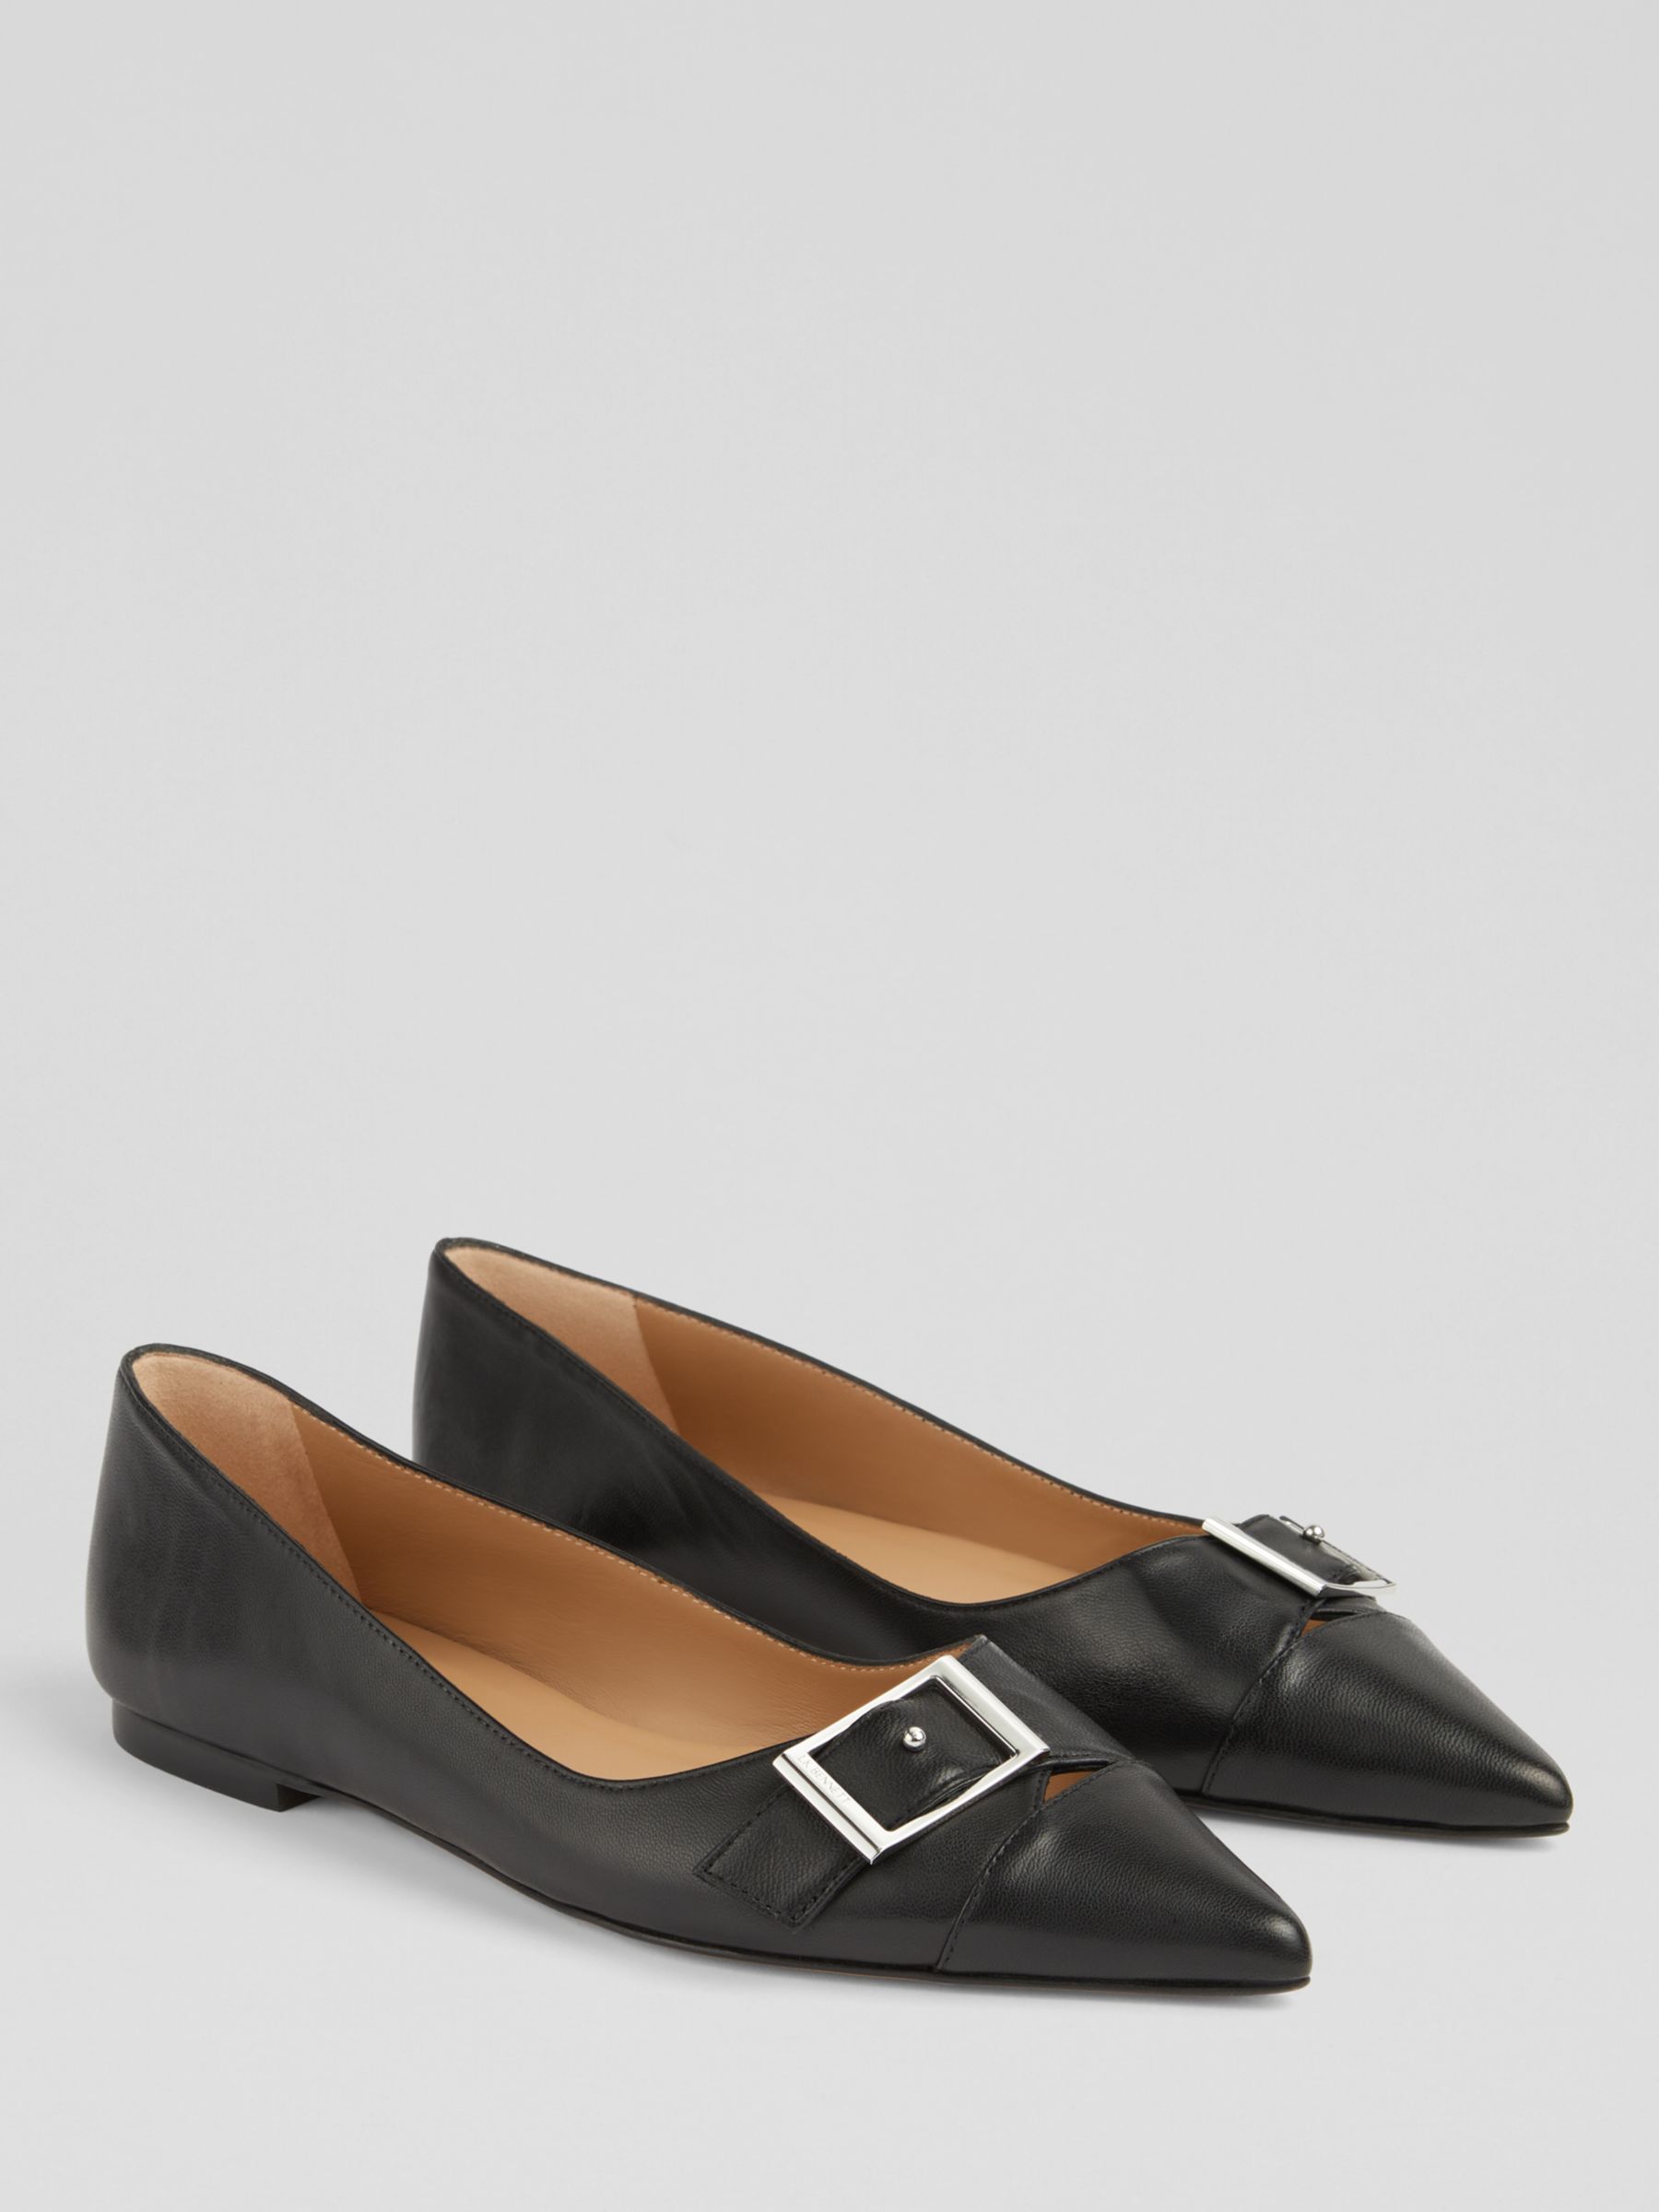 L.K.Bennett Brynn Leather Flat Shoes, Black, 4